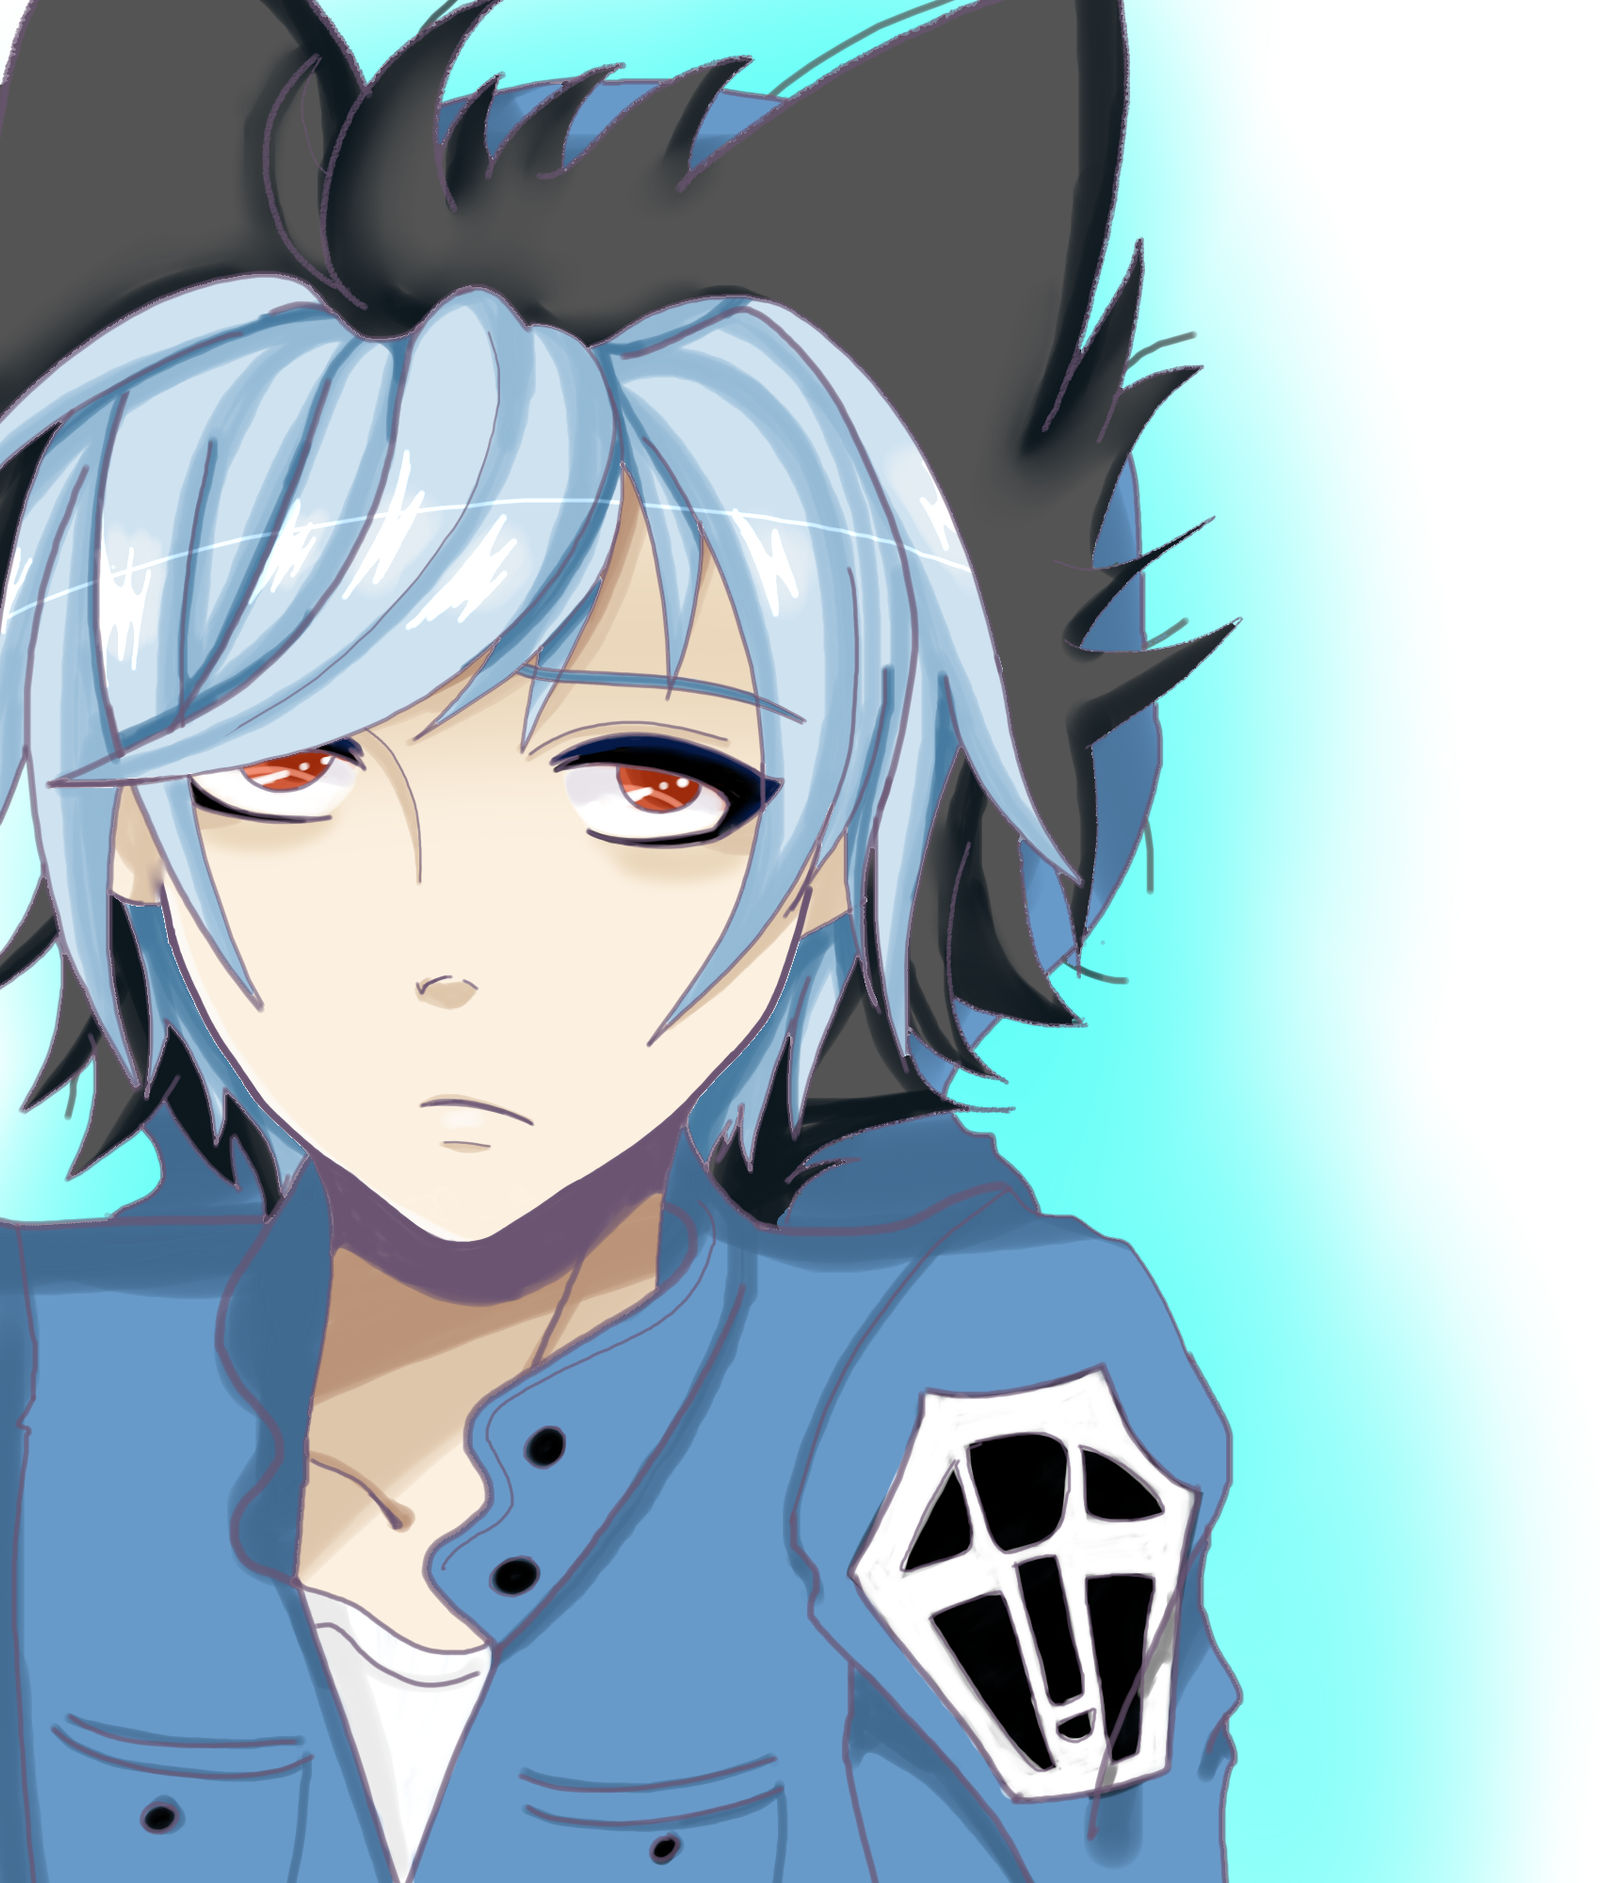 Custom Cursor - Sleepy Ash or Kuro is a guy with red eyes